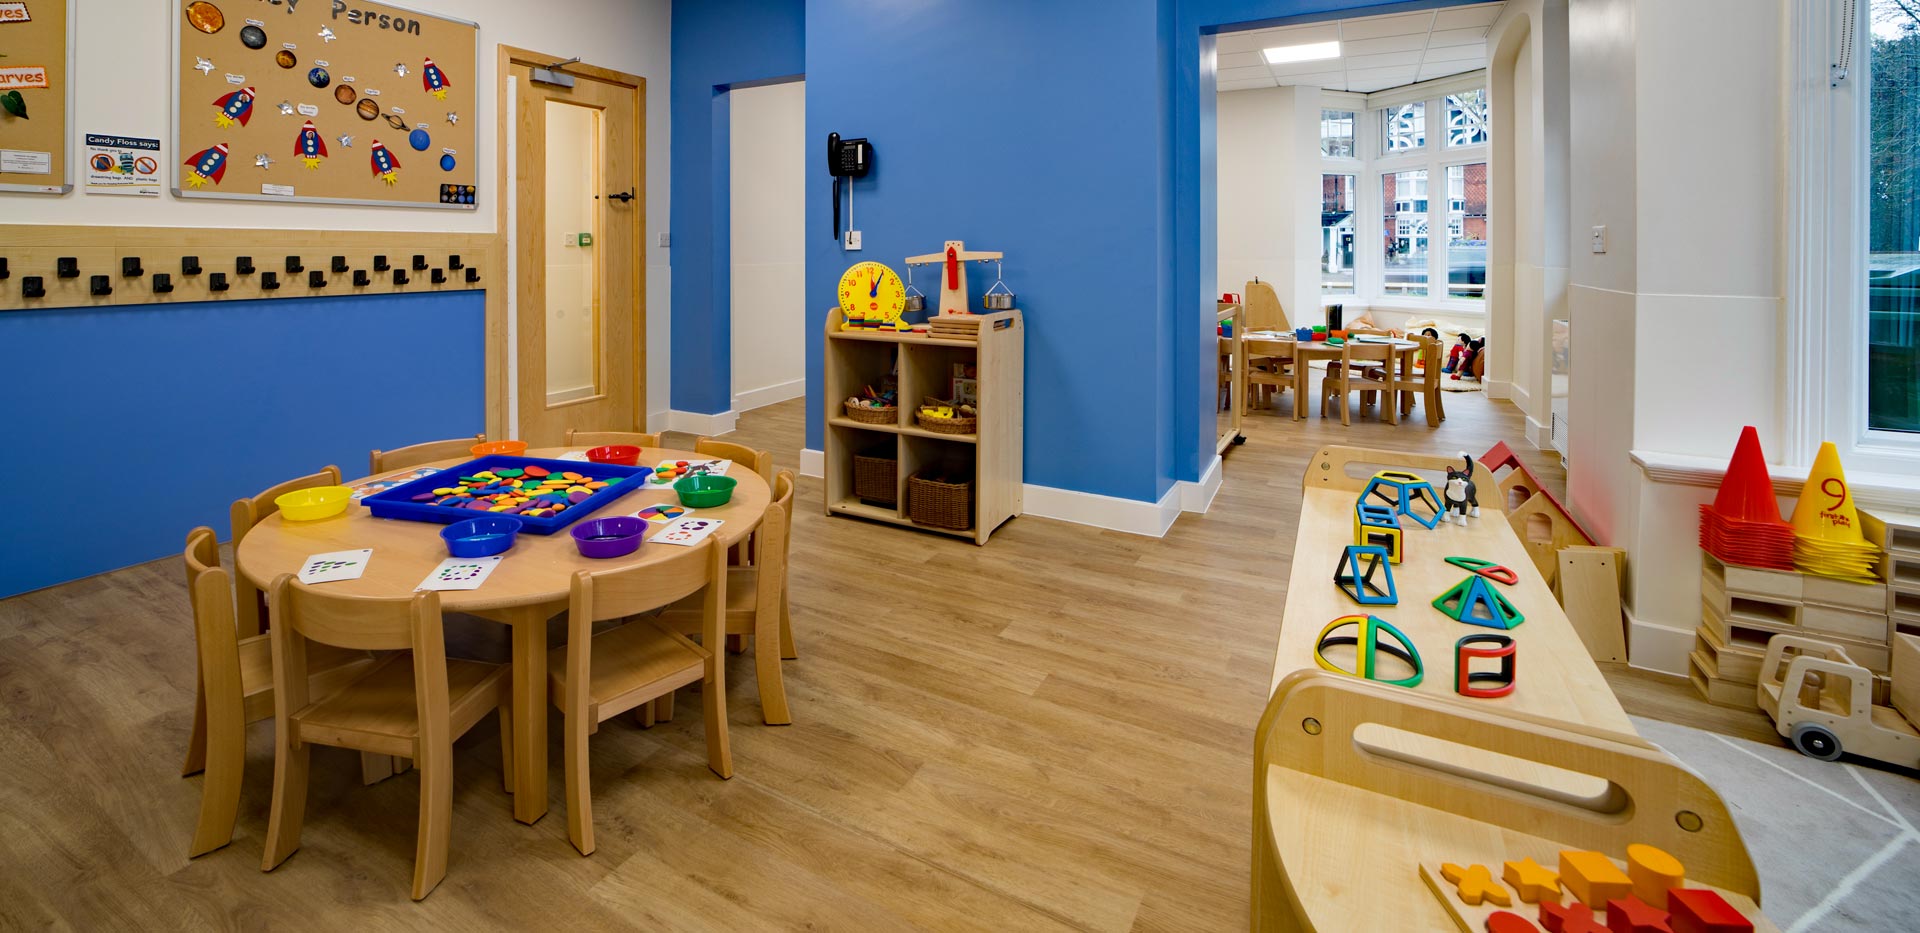 Maidenhead Day Nursery and Preschool